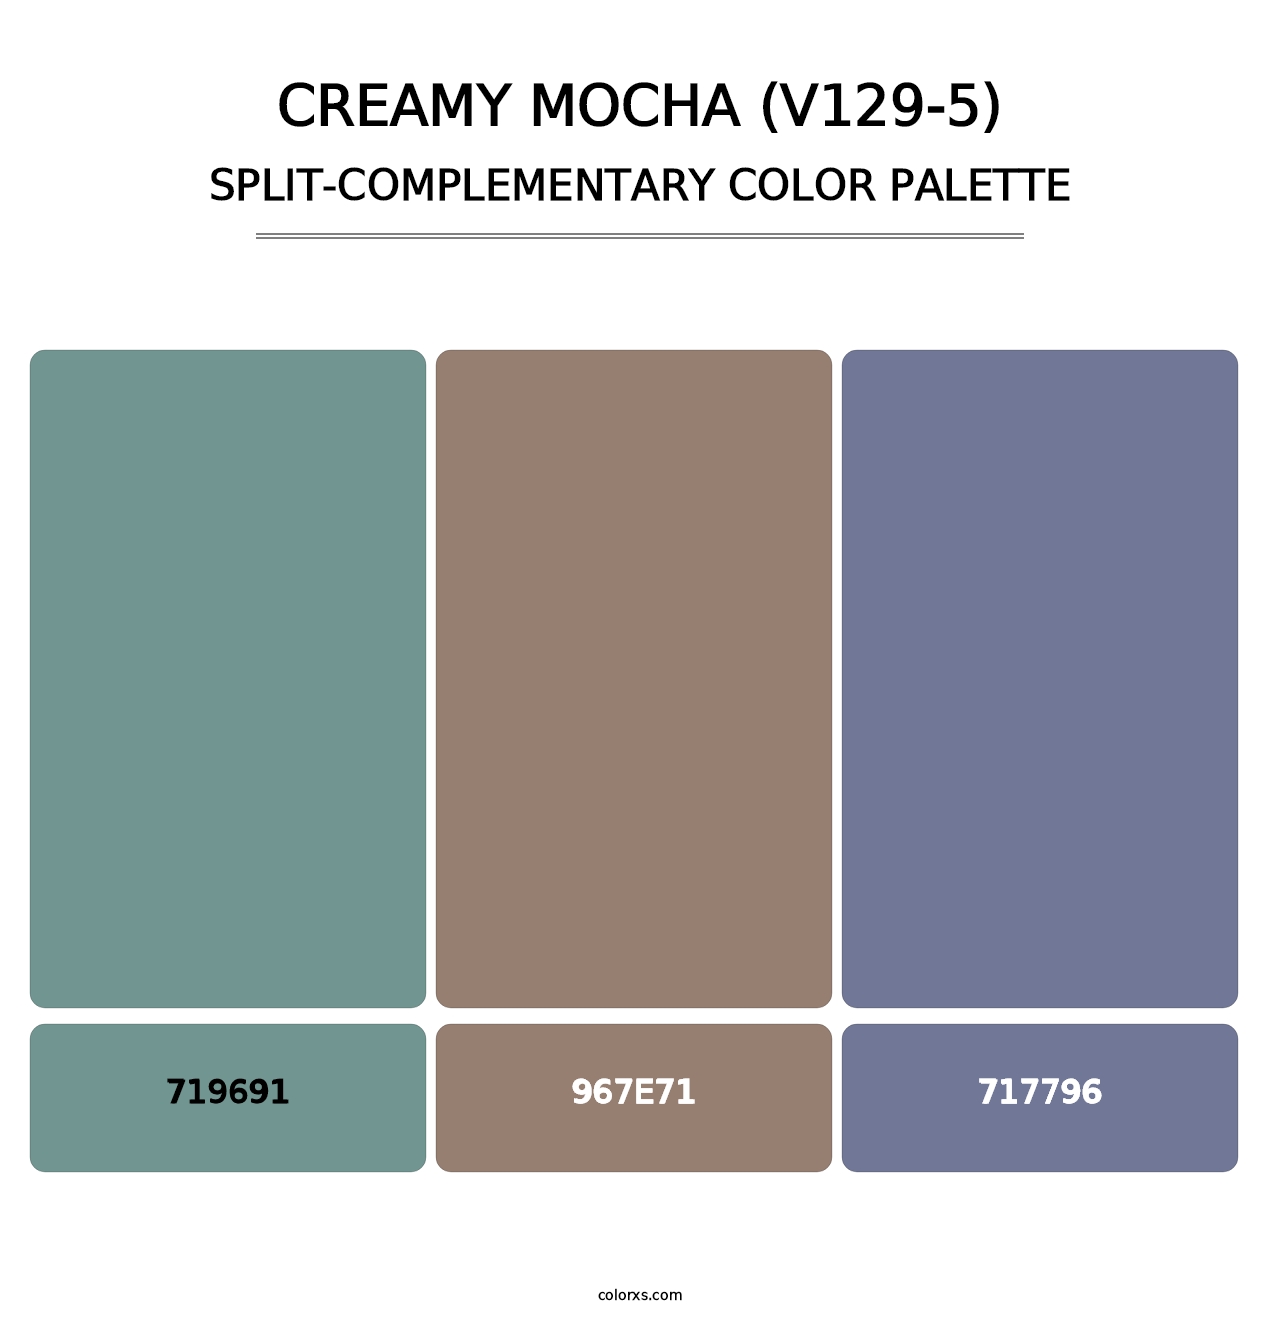 Creamy Mocha (V129-5) - Split-Complementary Color Palette